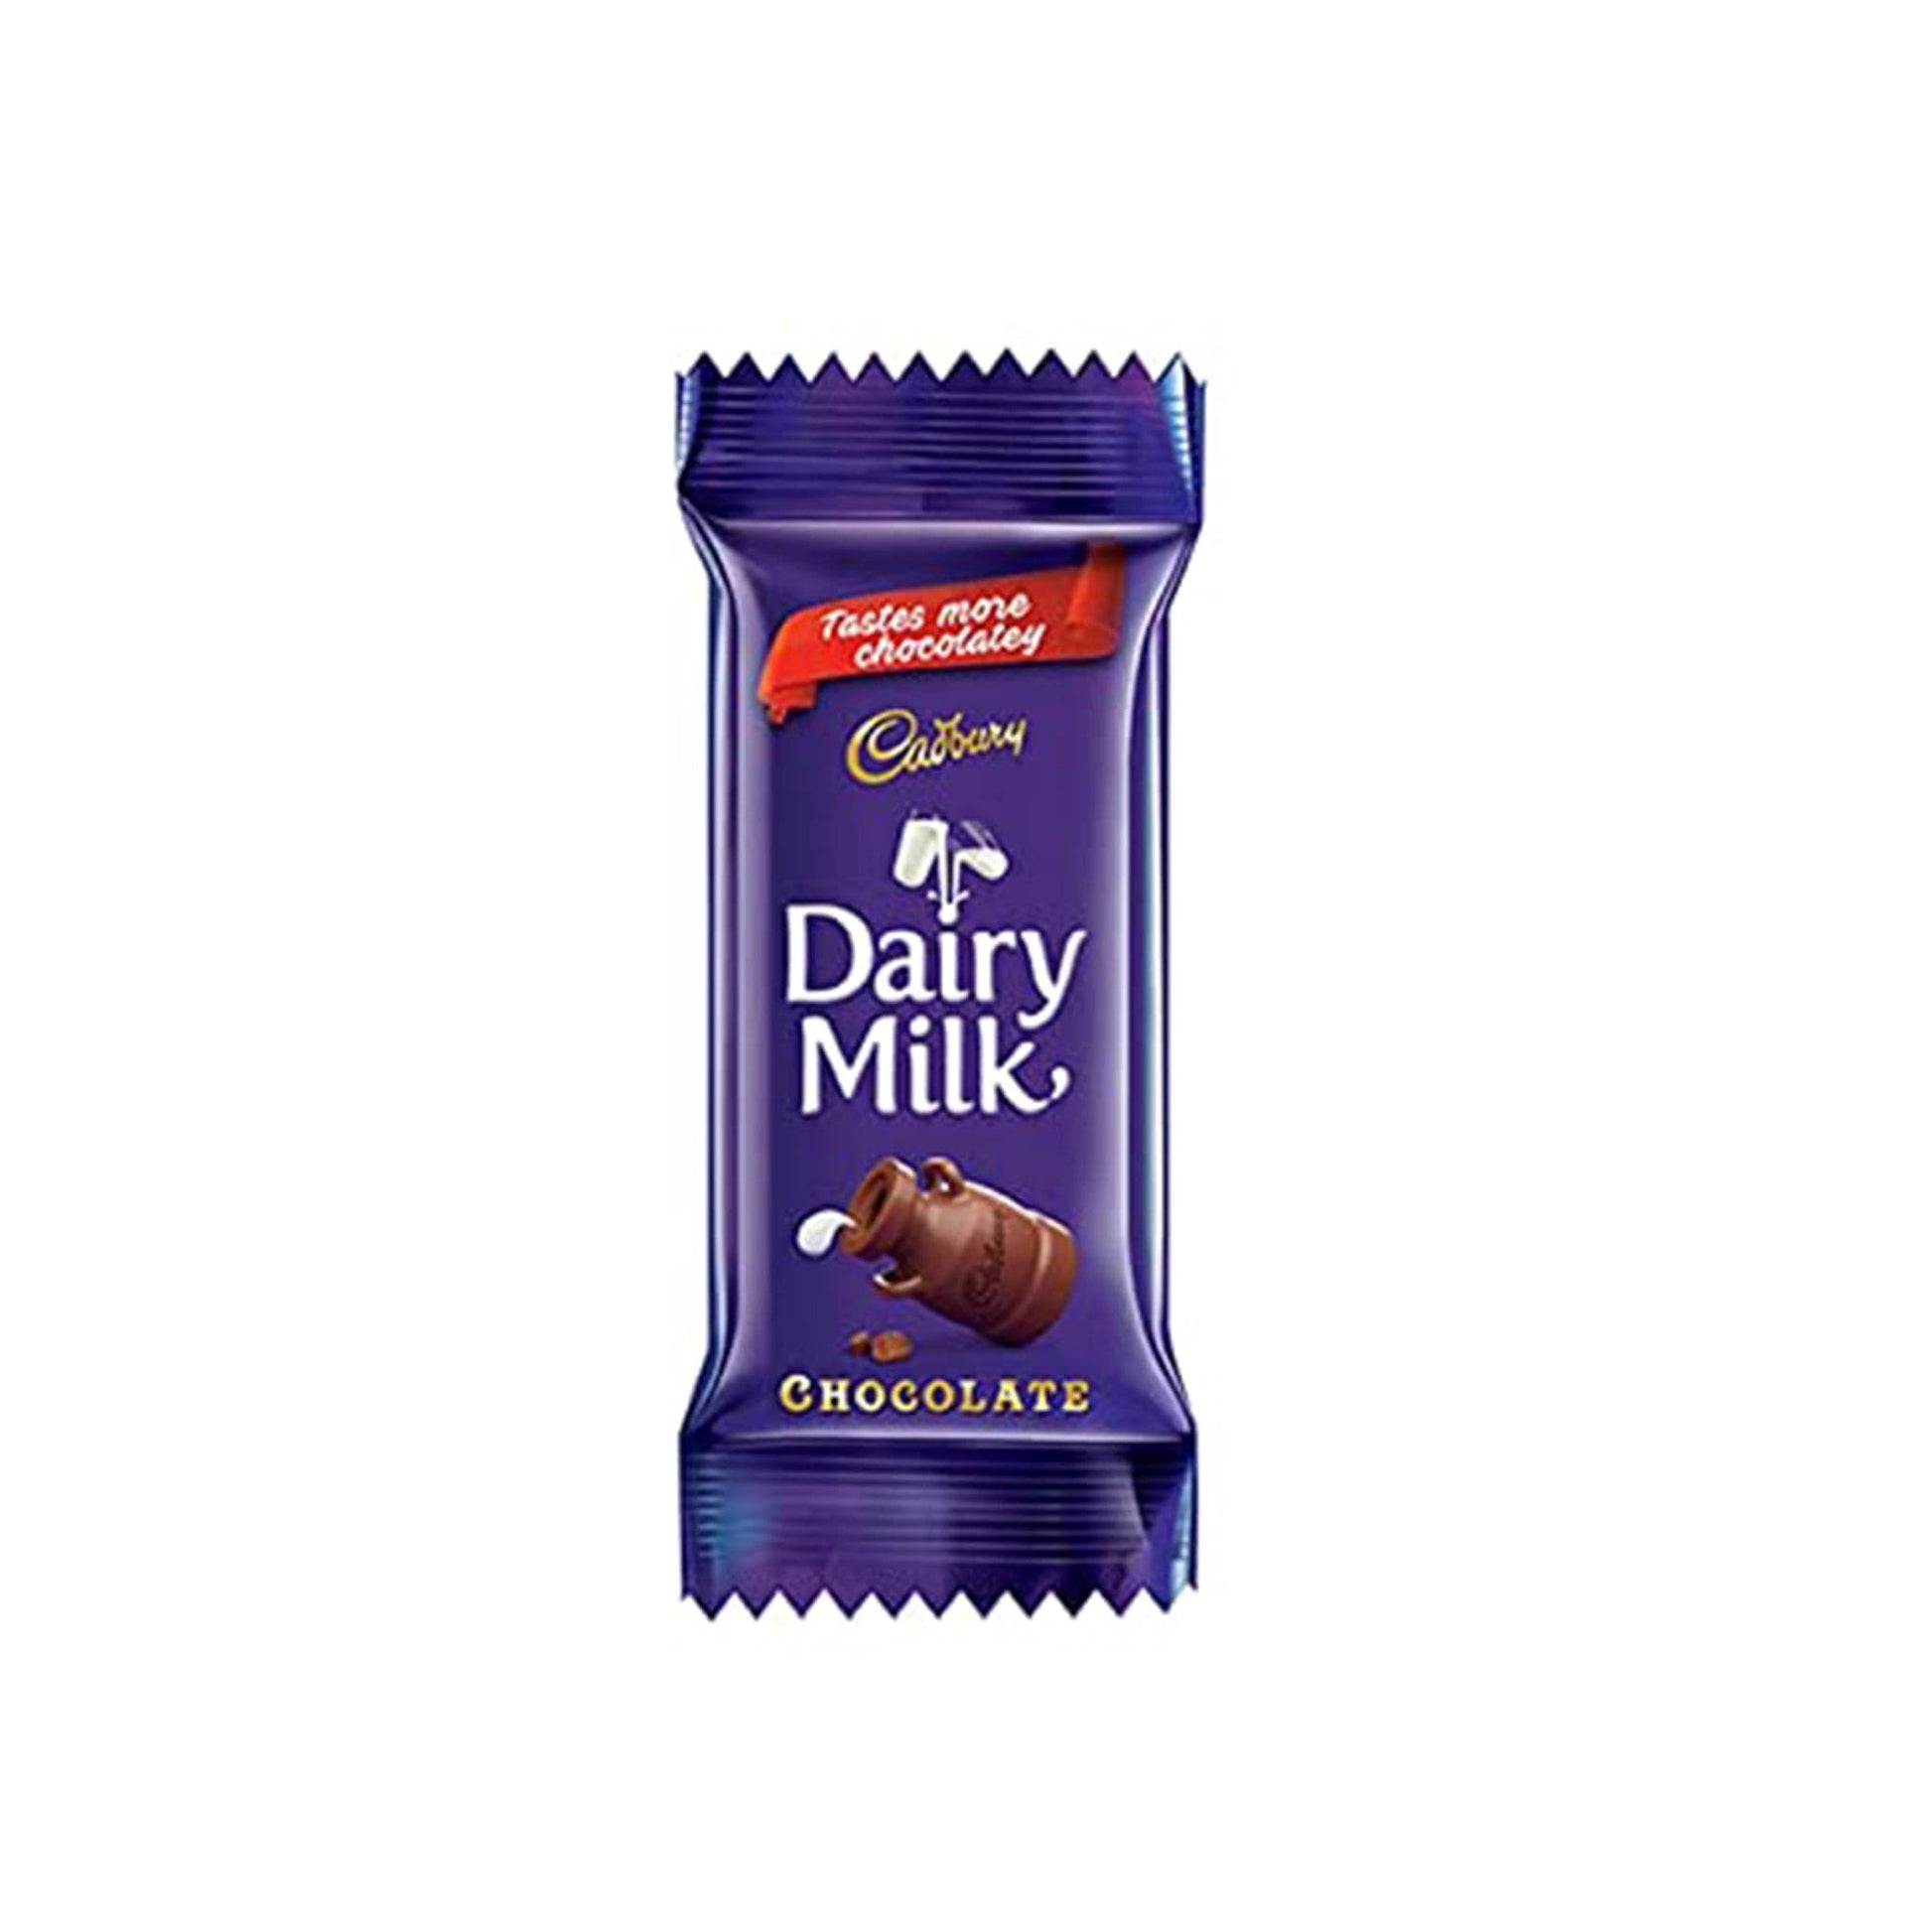 Cadbury DairyMilk Chocolate.